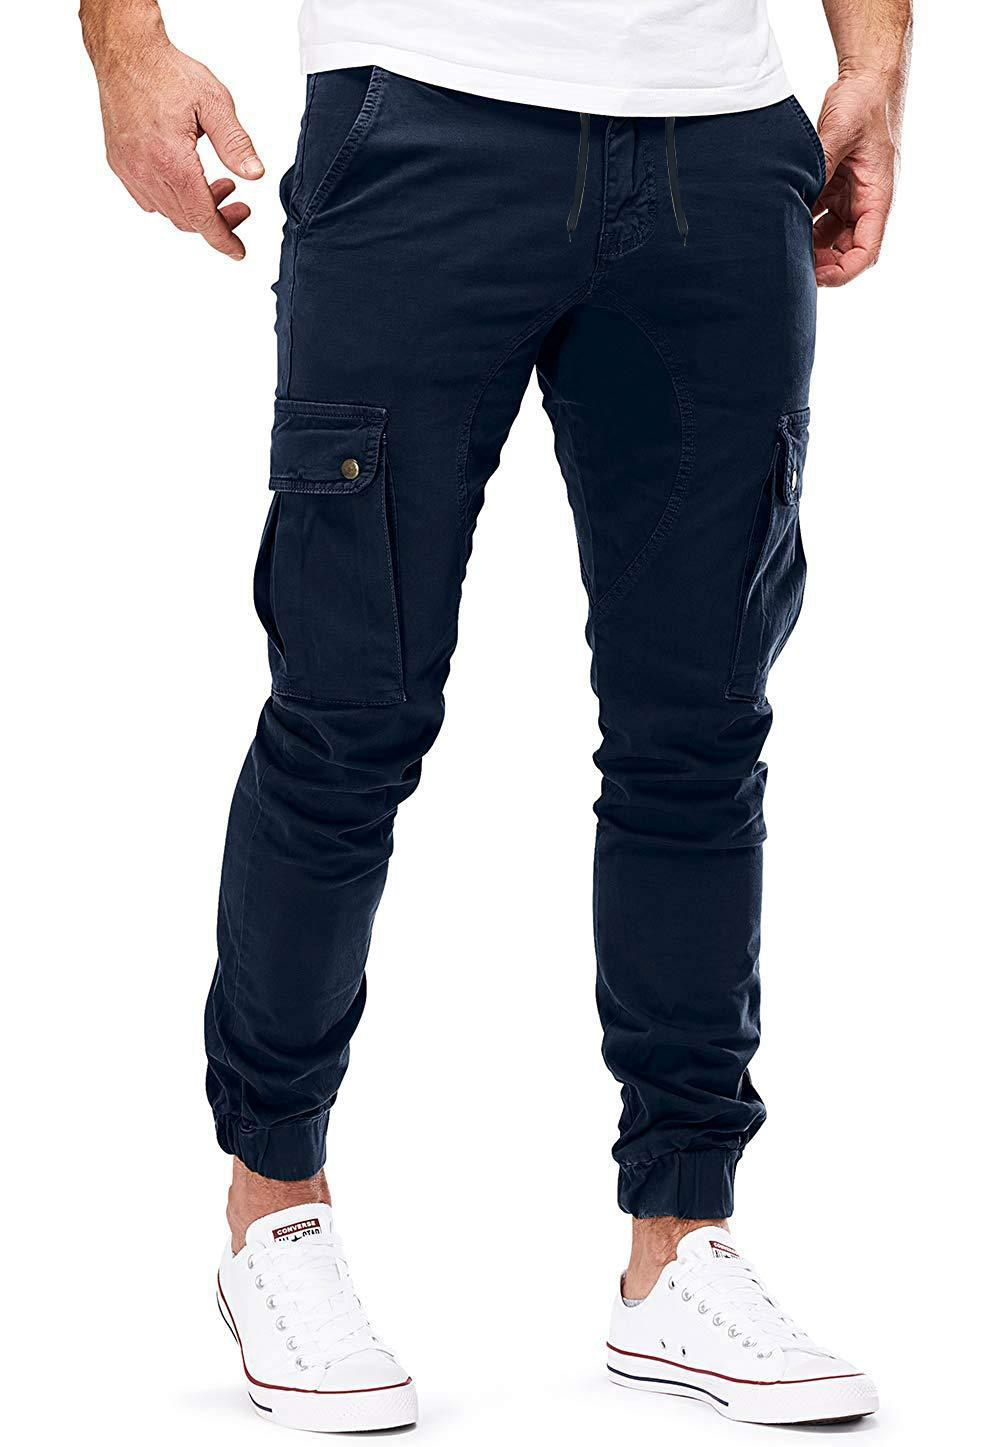 Men's Woven Casual Cargo Pants